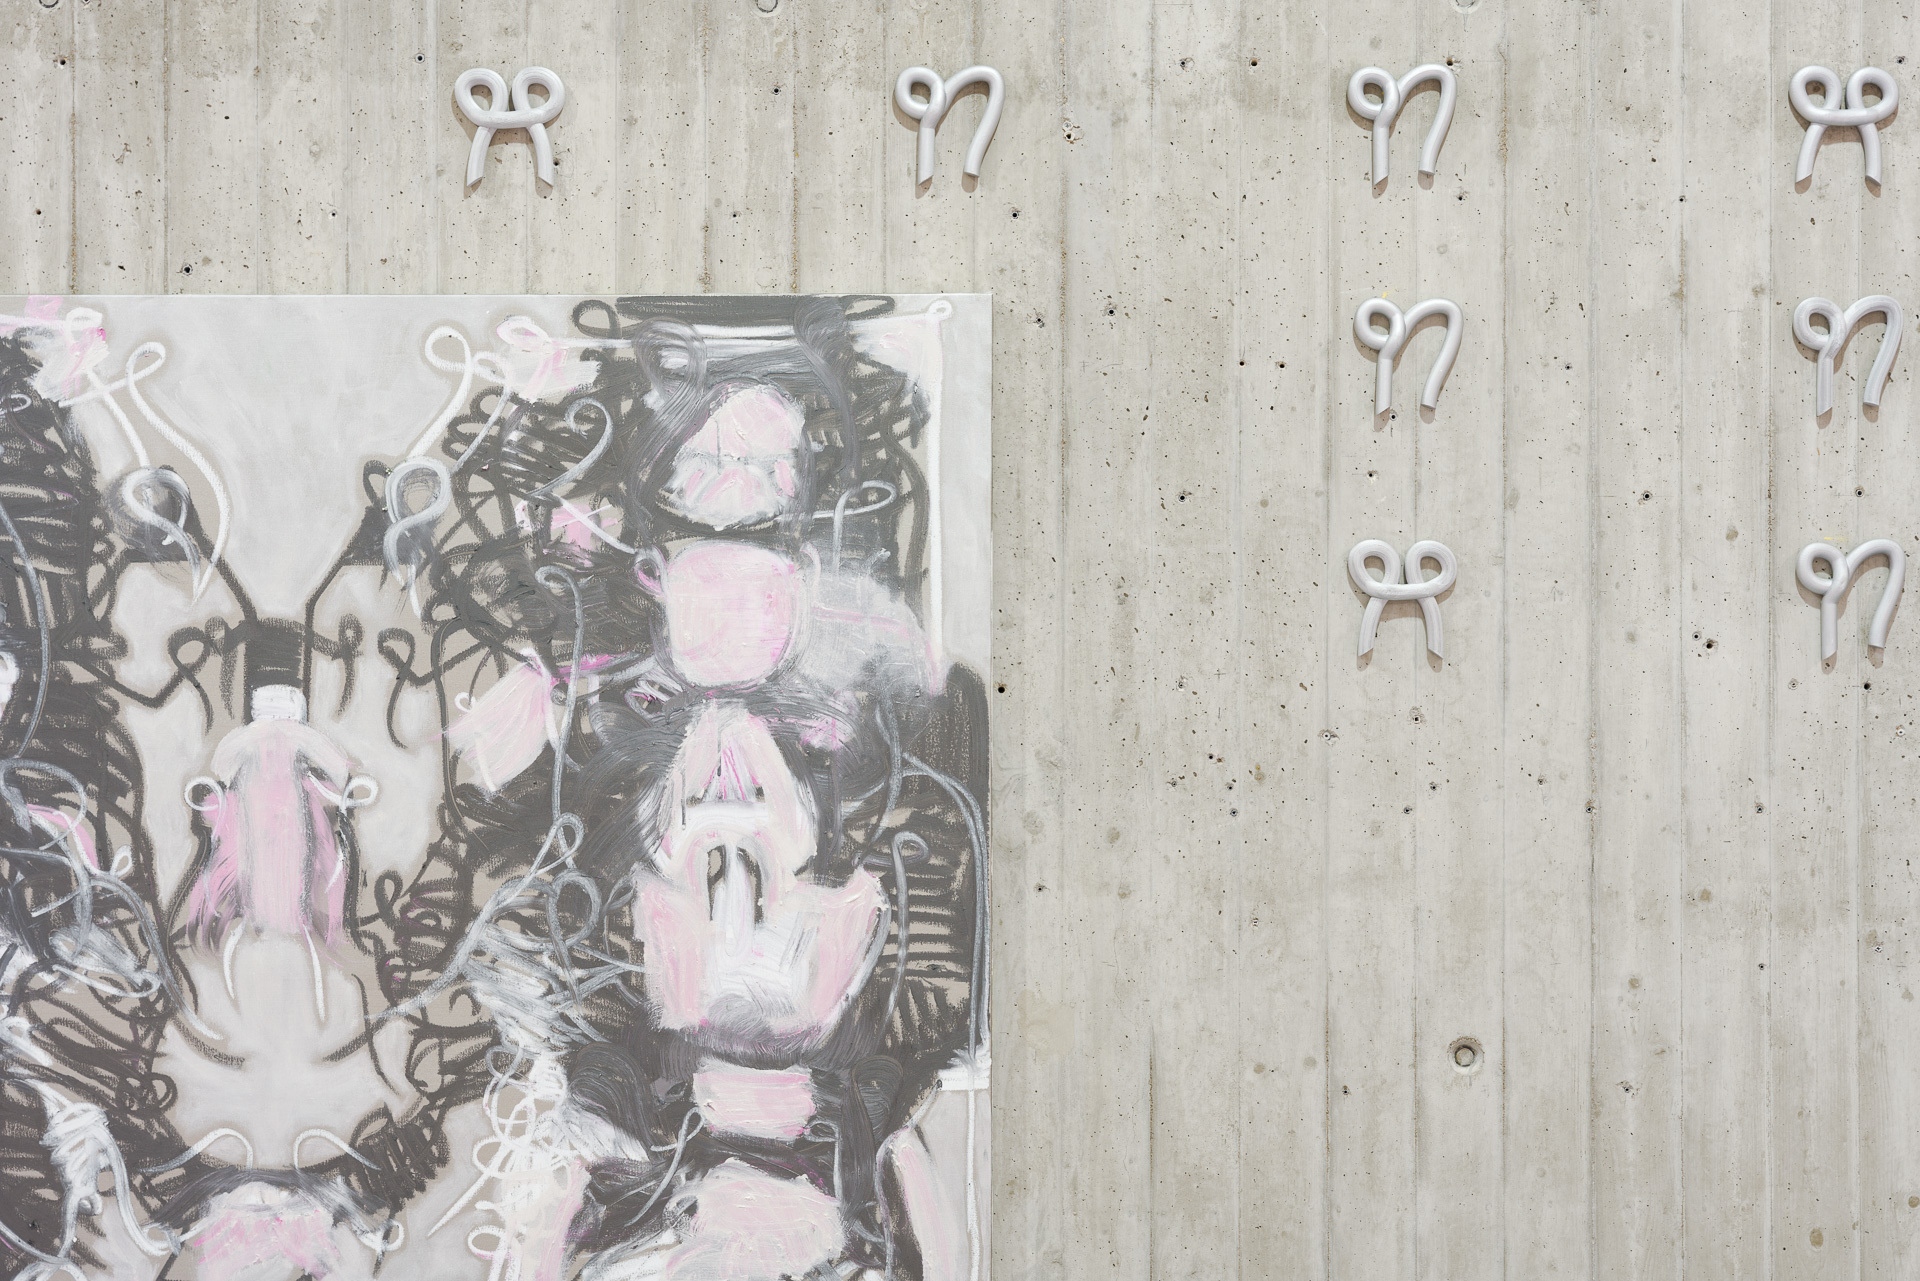 Melike Kara, Kordi afshar, Detail, oil stick and acrylic on canvas, 200 x 180 cm, 2022, Neue Galerie Gladbeck, Foto: Jana Buch, courtesy of the artist and Neue Galerie Gladbeck